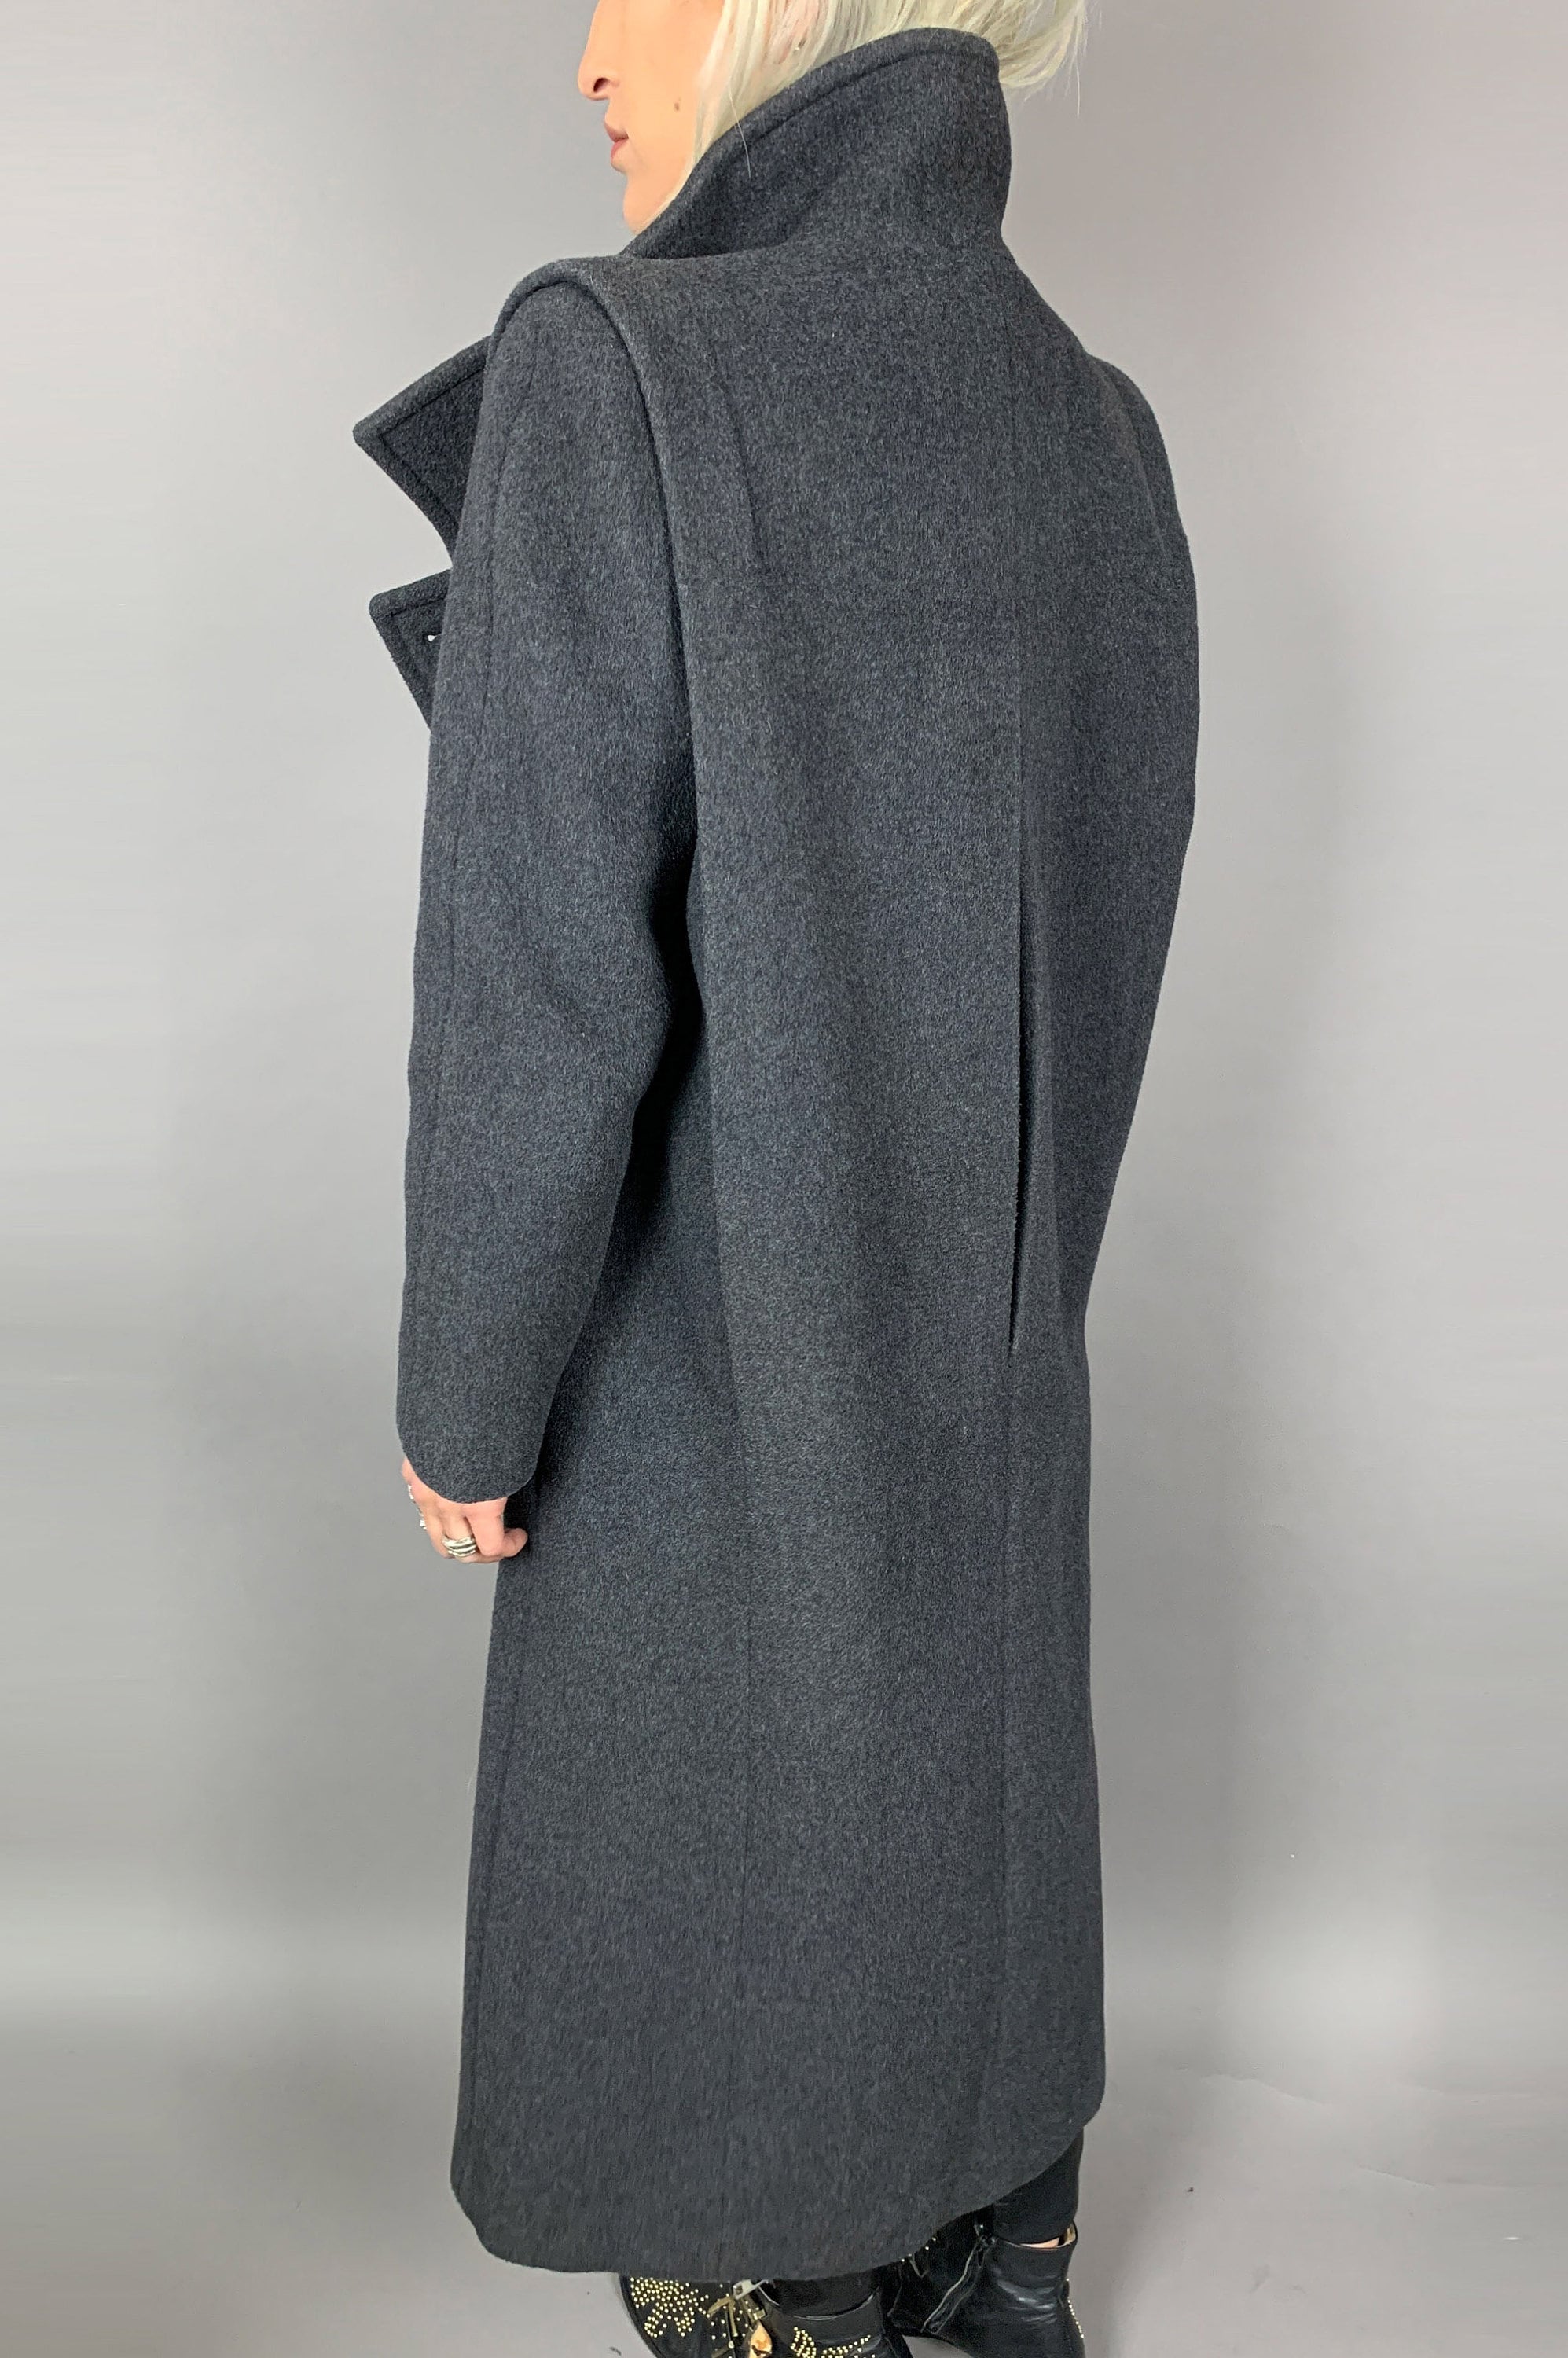 Large/XL Vintage Long Gray WOOL Maxi Coat Blazer 70s/80s Comfy Warm Winter Statement Minimalist Shoulder Padding Jacket Grey Topcoat